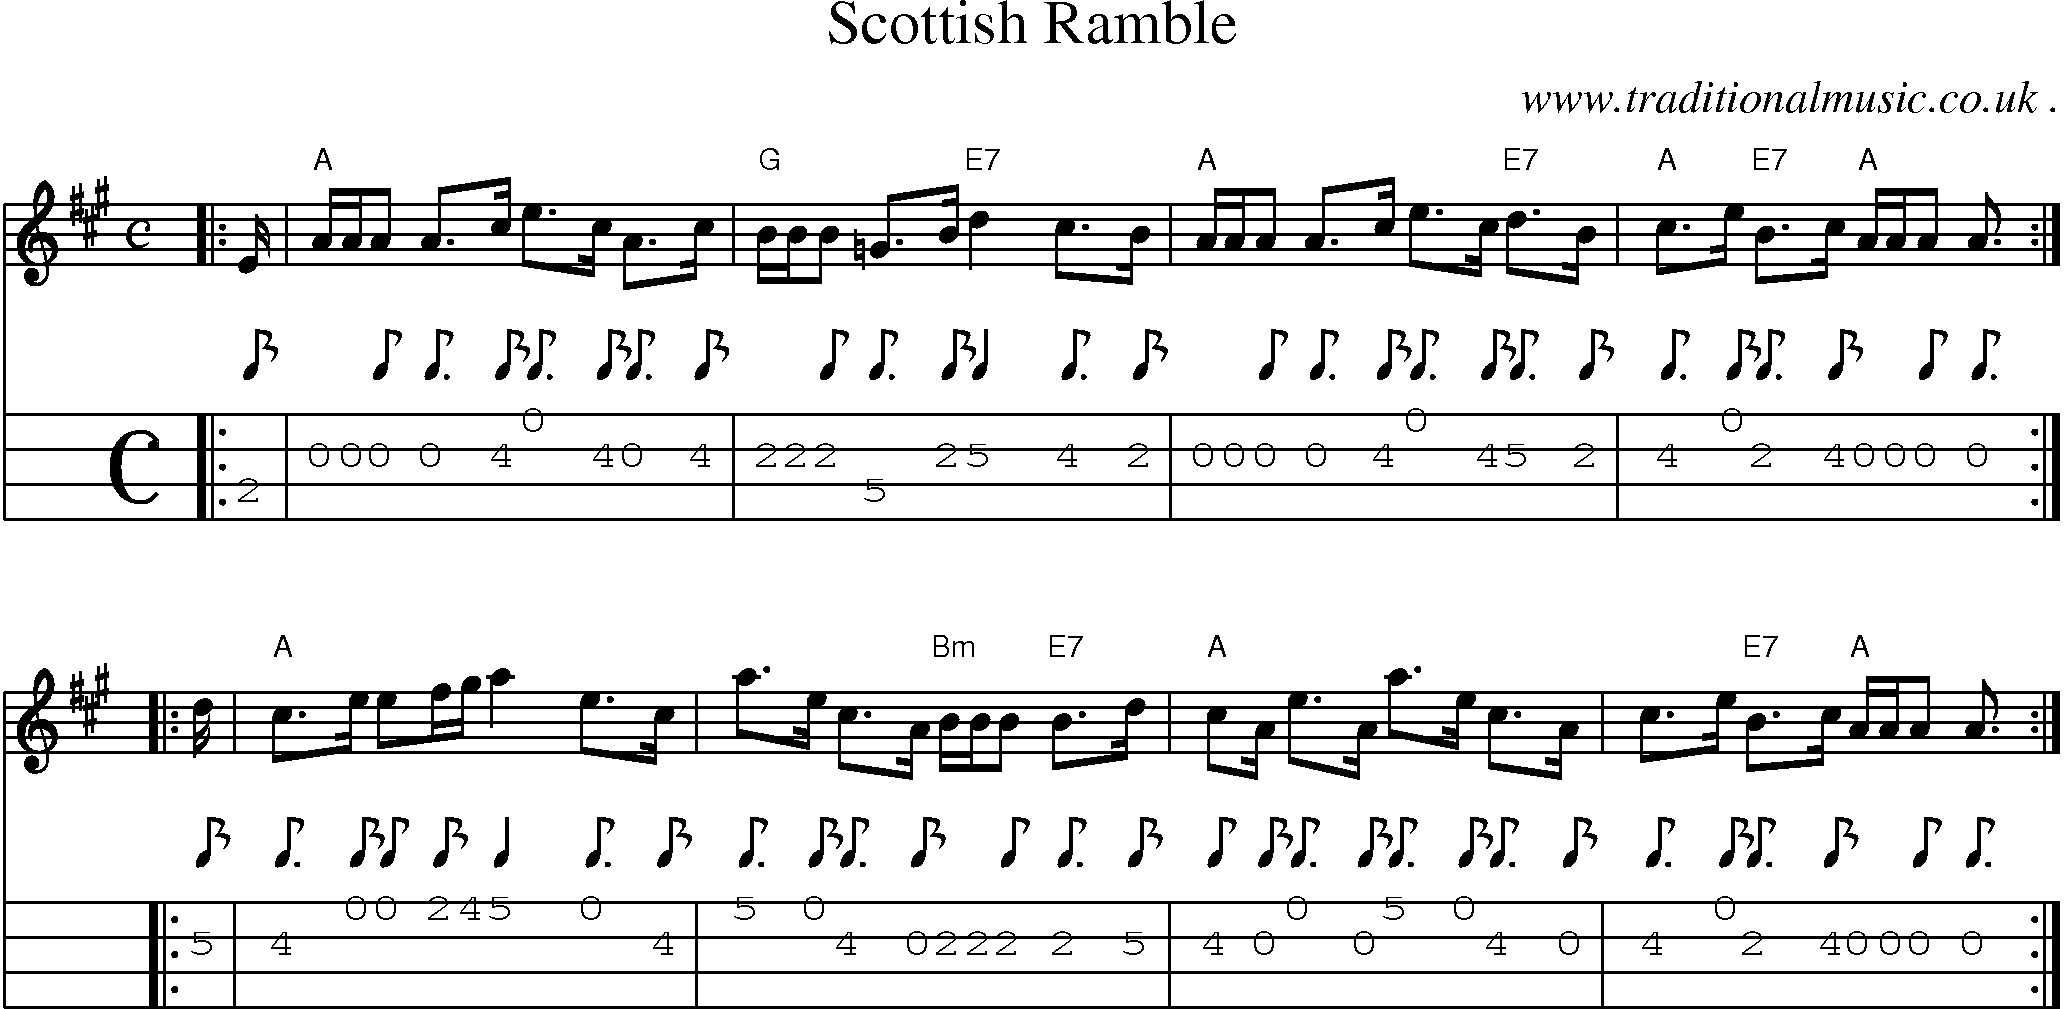 Sheet-music  score, Chords and Mandolin Tabs for Scottish Ramble